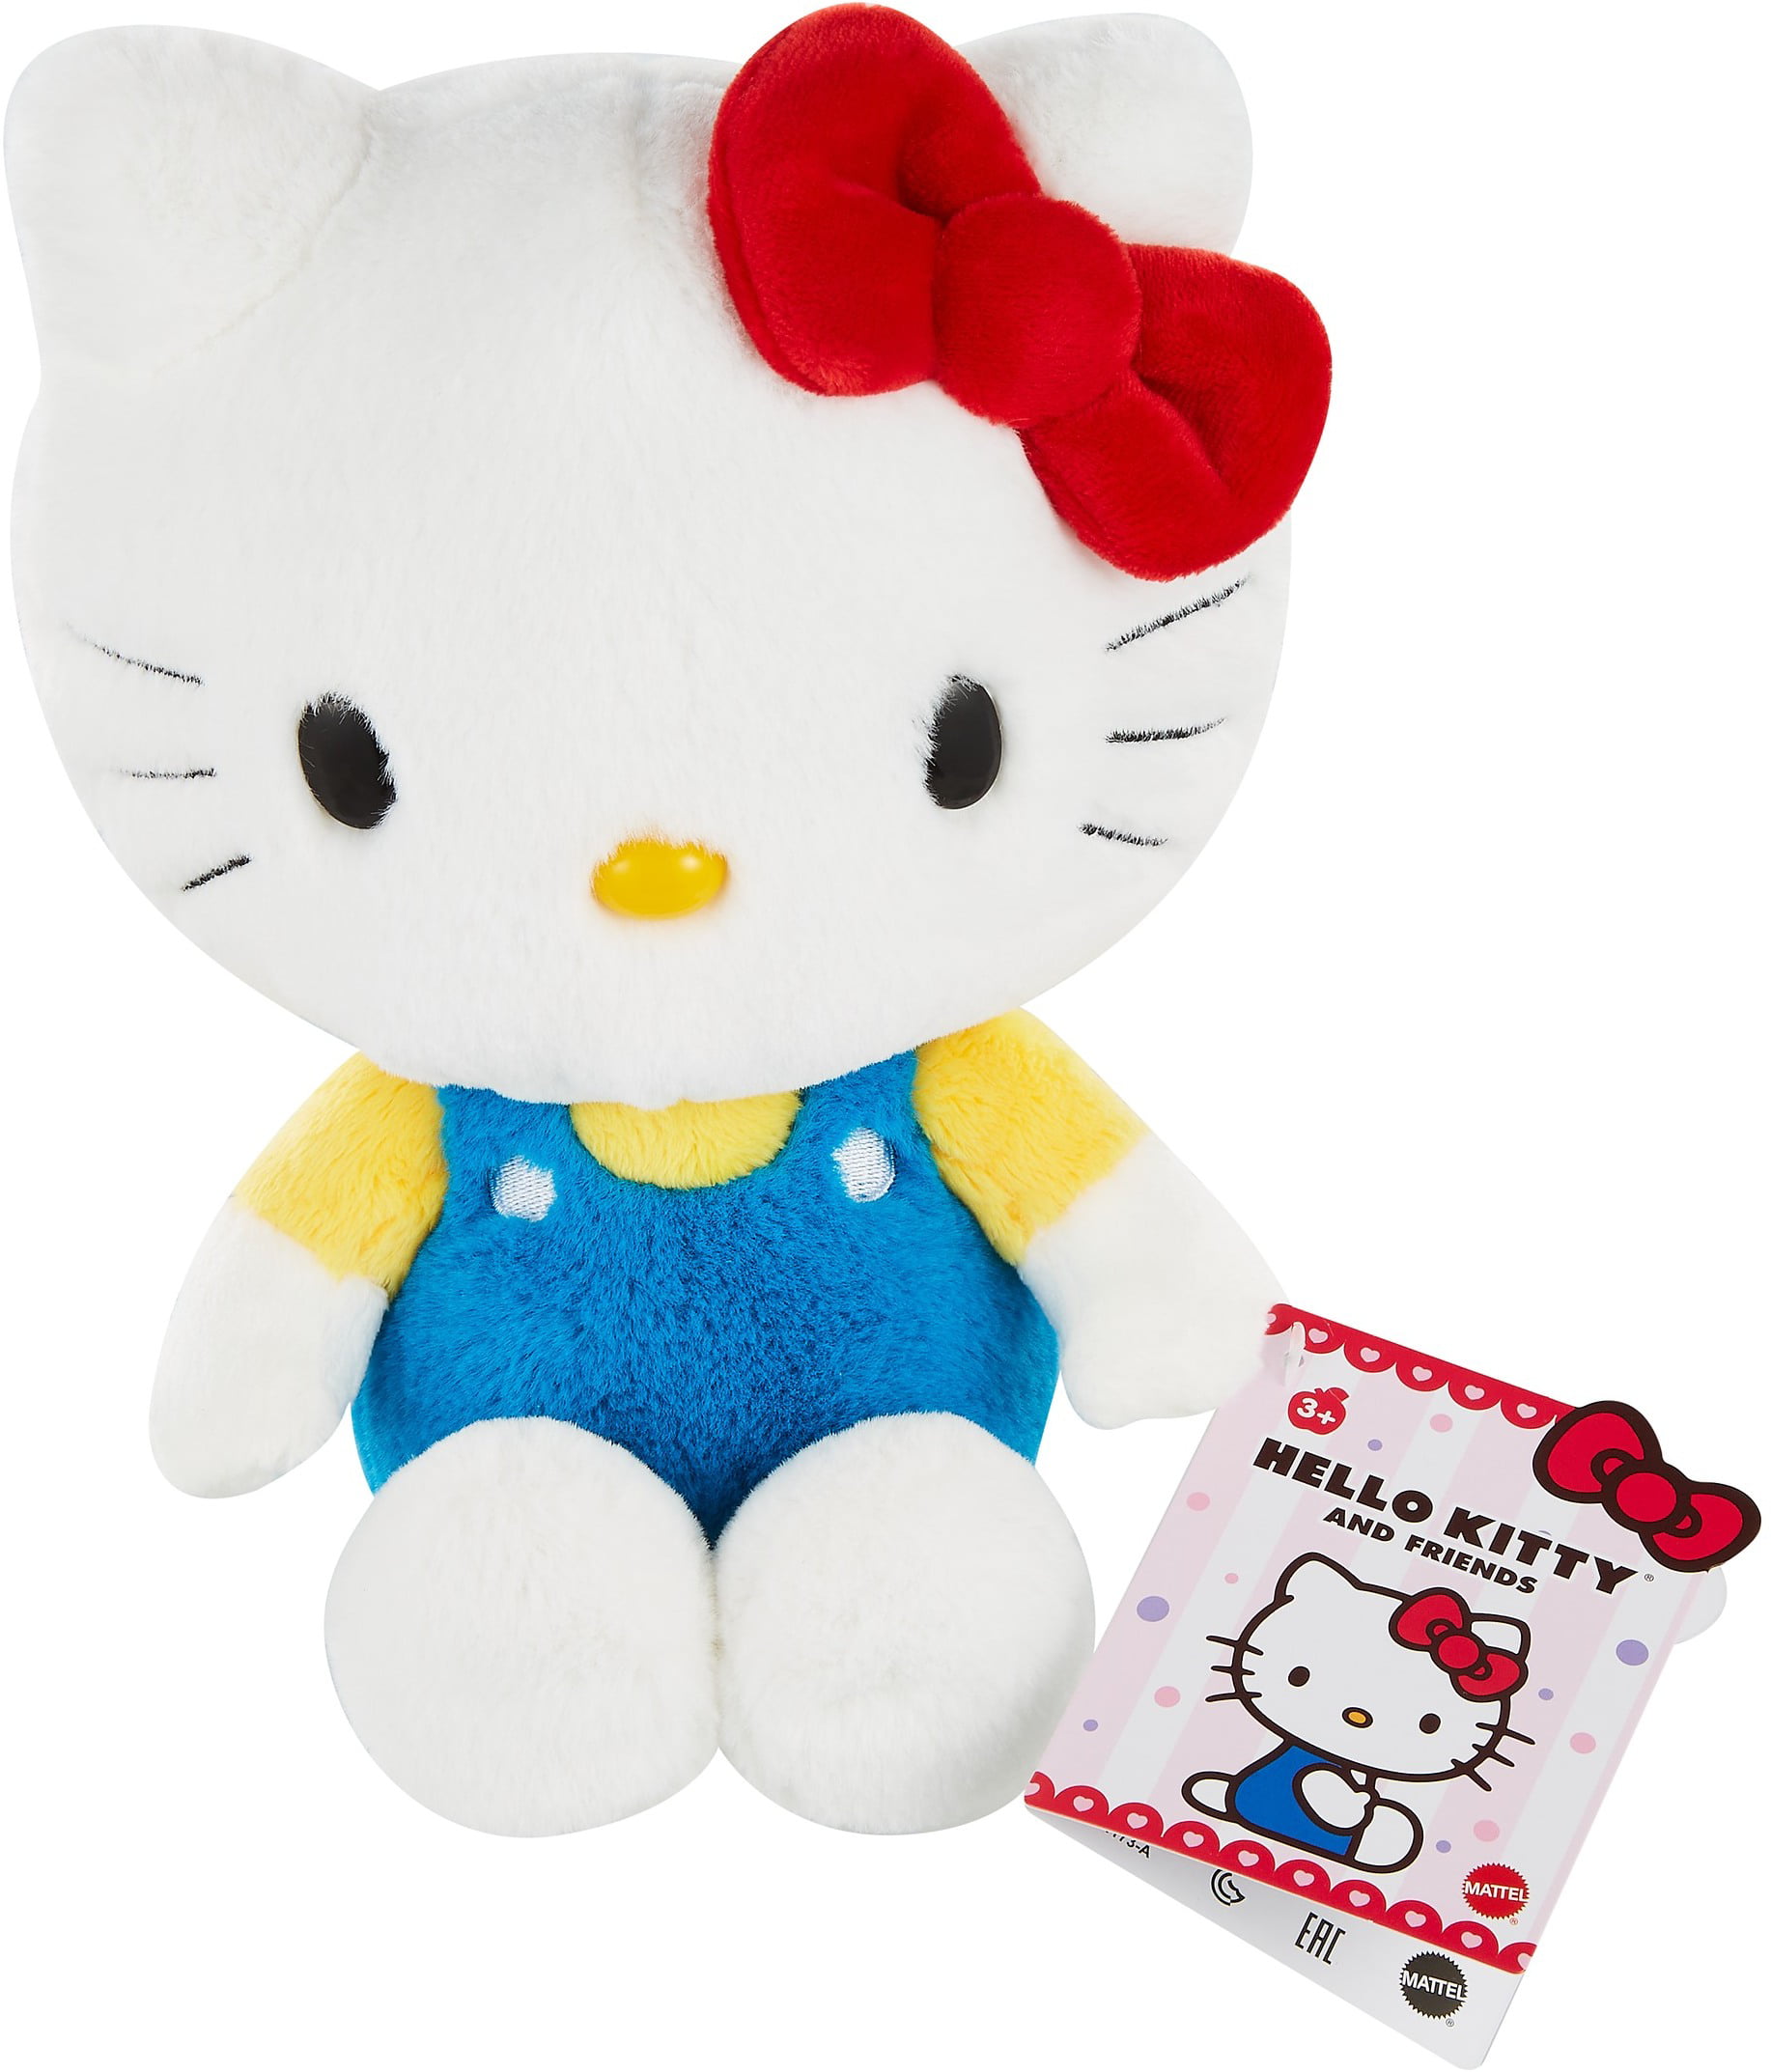 Sanrio Hello Kitty and Friends Plush Doll (8-In / 20.32-Cm) - Walmart